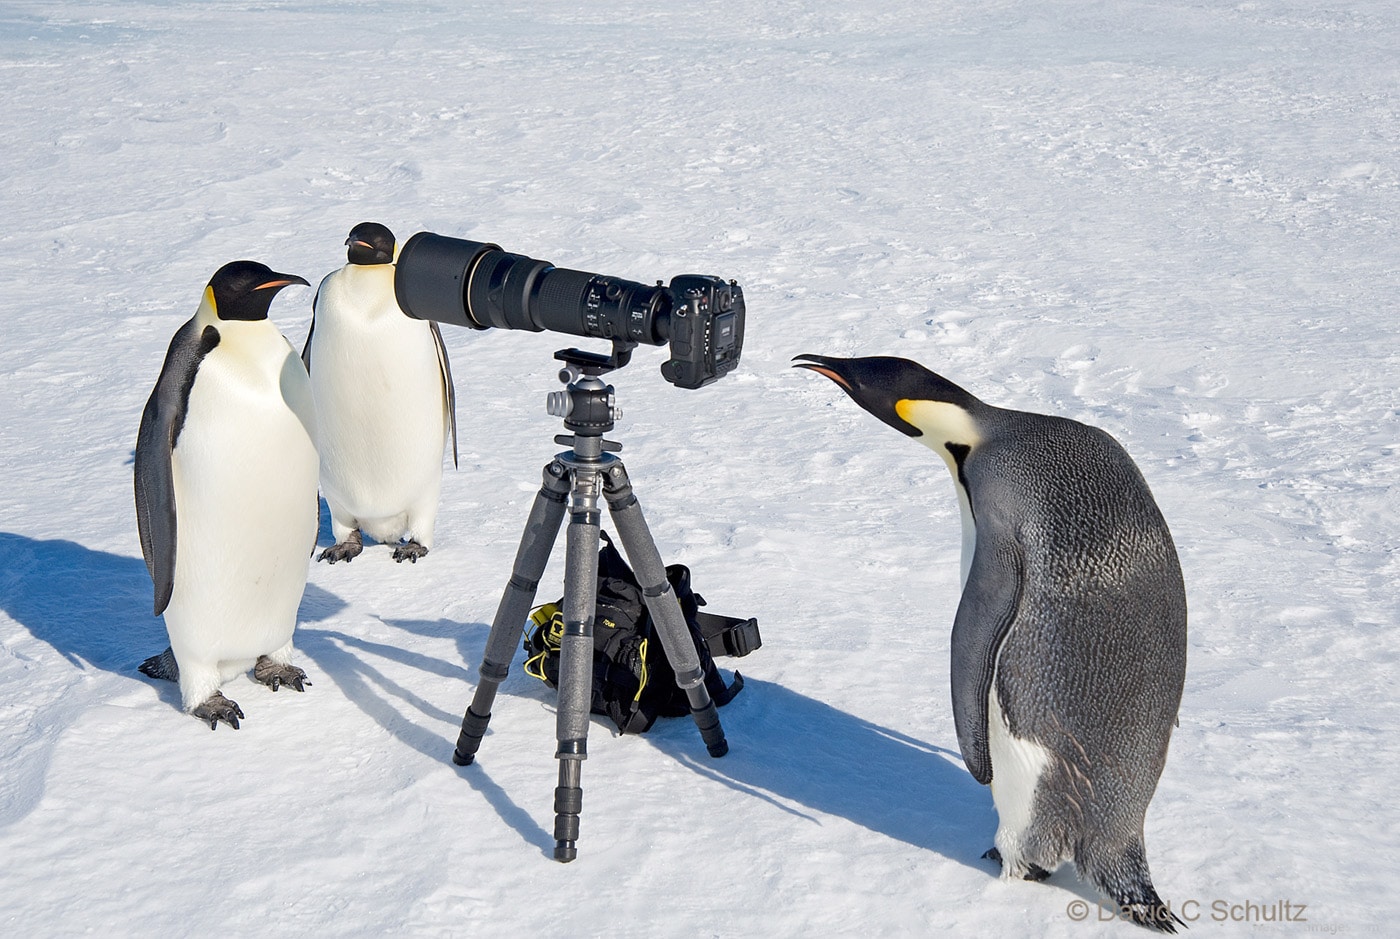 Emperor penguins with my camera in Antarctica - Image #163-4323